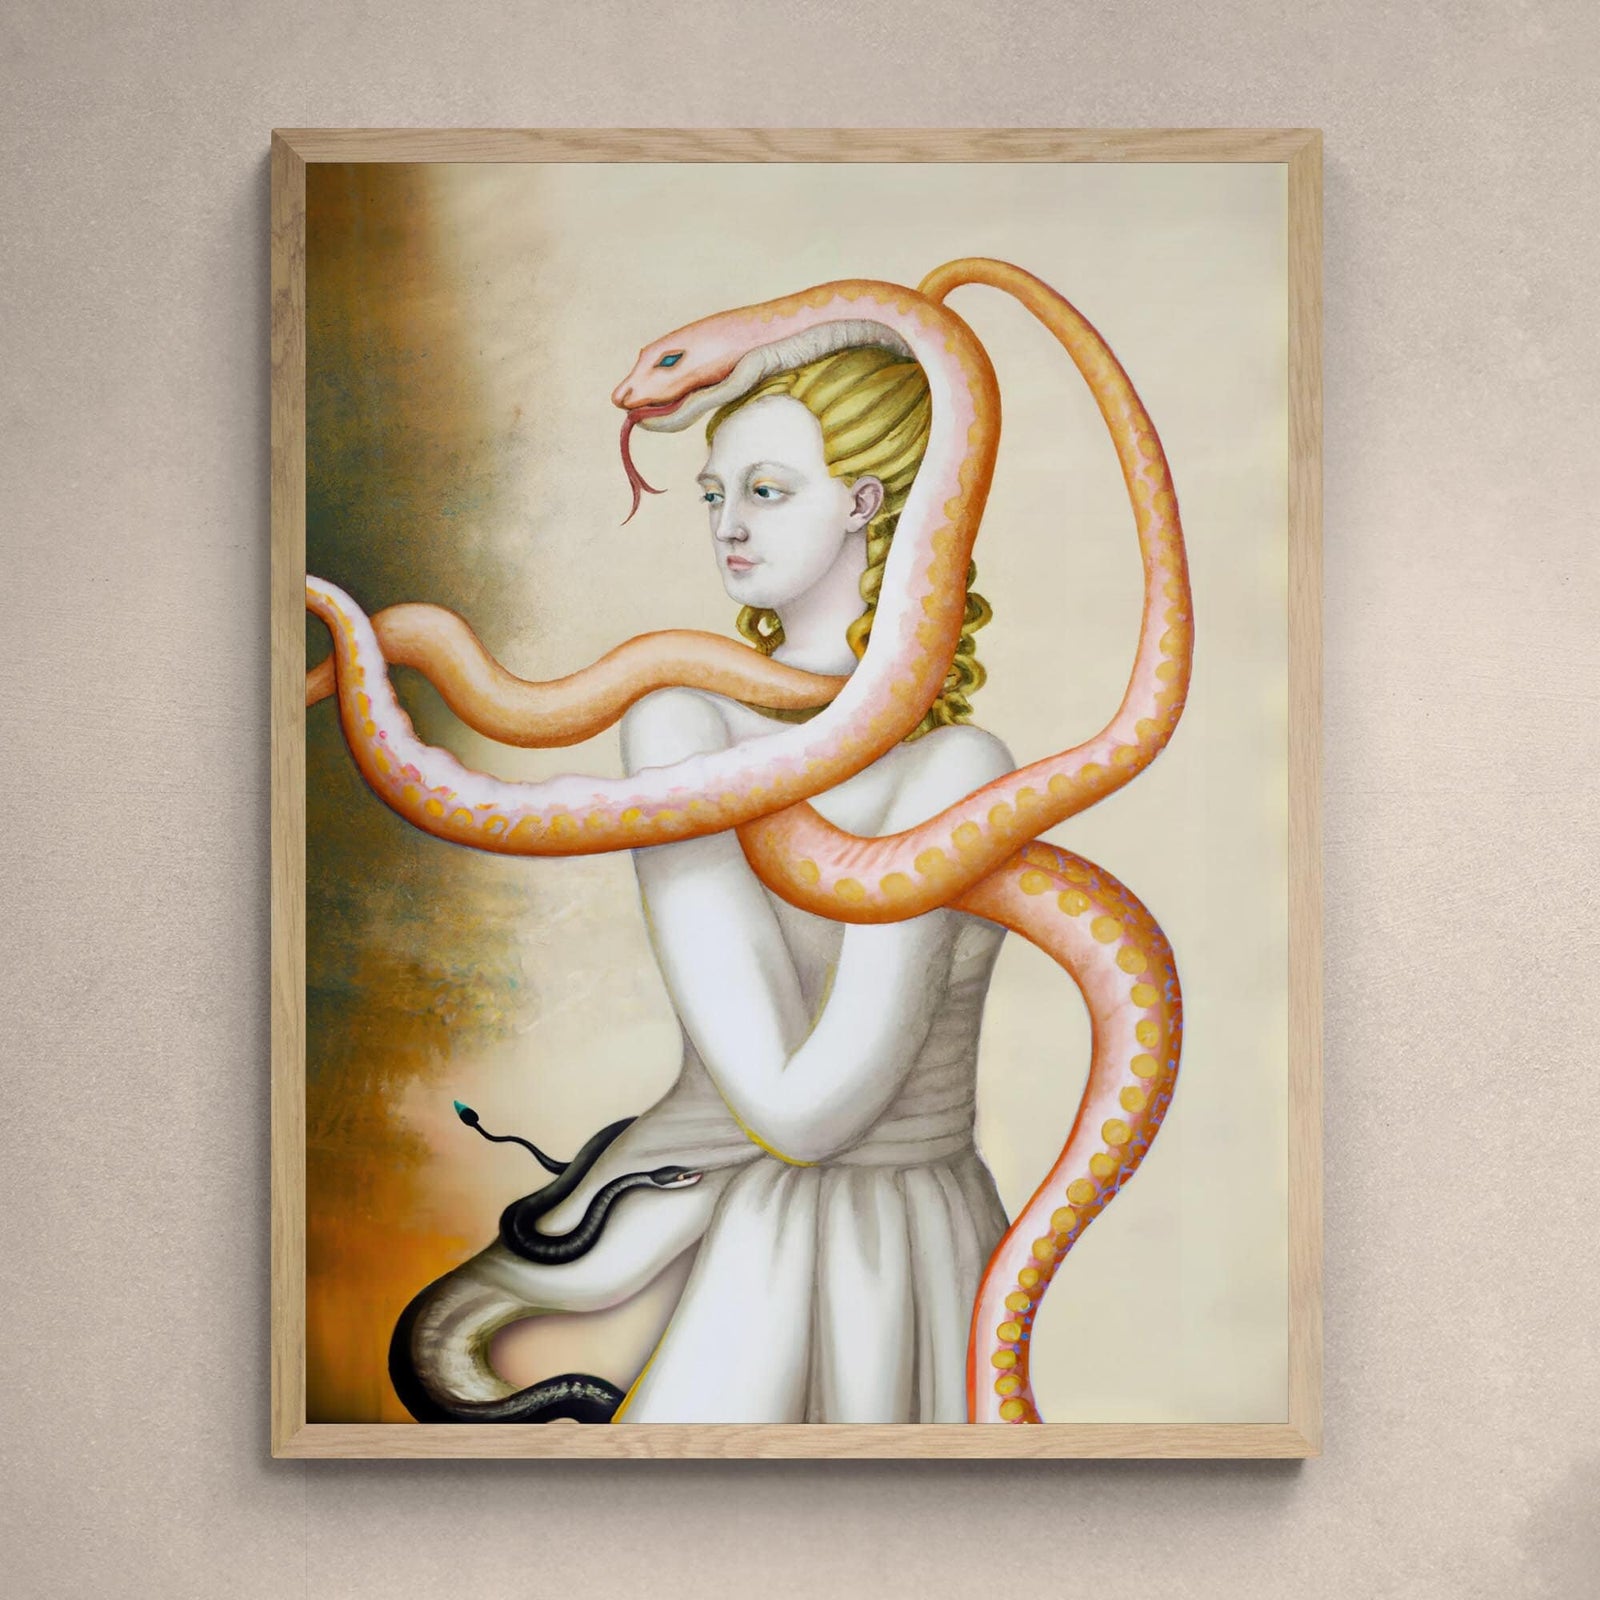 Natural Frame / 11"x14" The Serpent Bearer | Original Surrealist Art | Dada, Weird, Strange Art, Fantasy | Naga, Snake Lover, Fine Art Framed Print